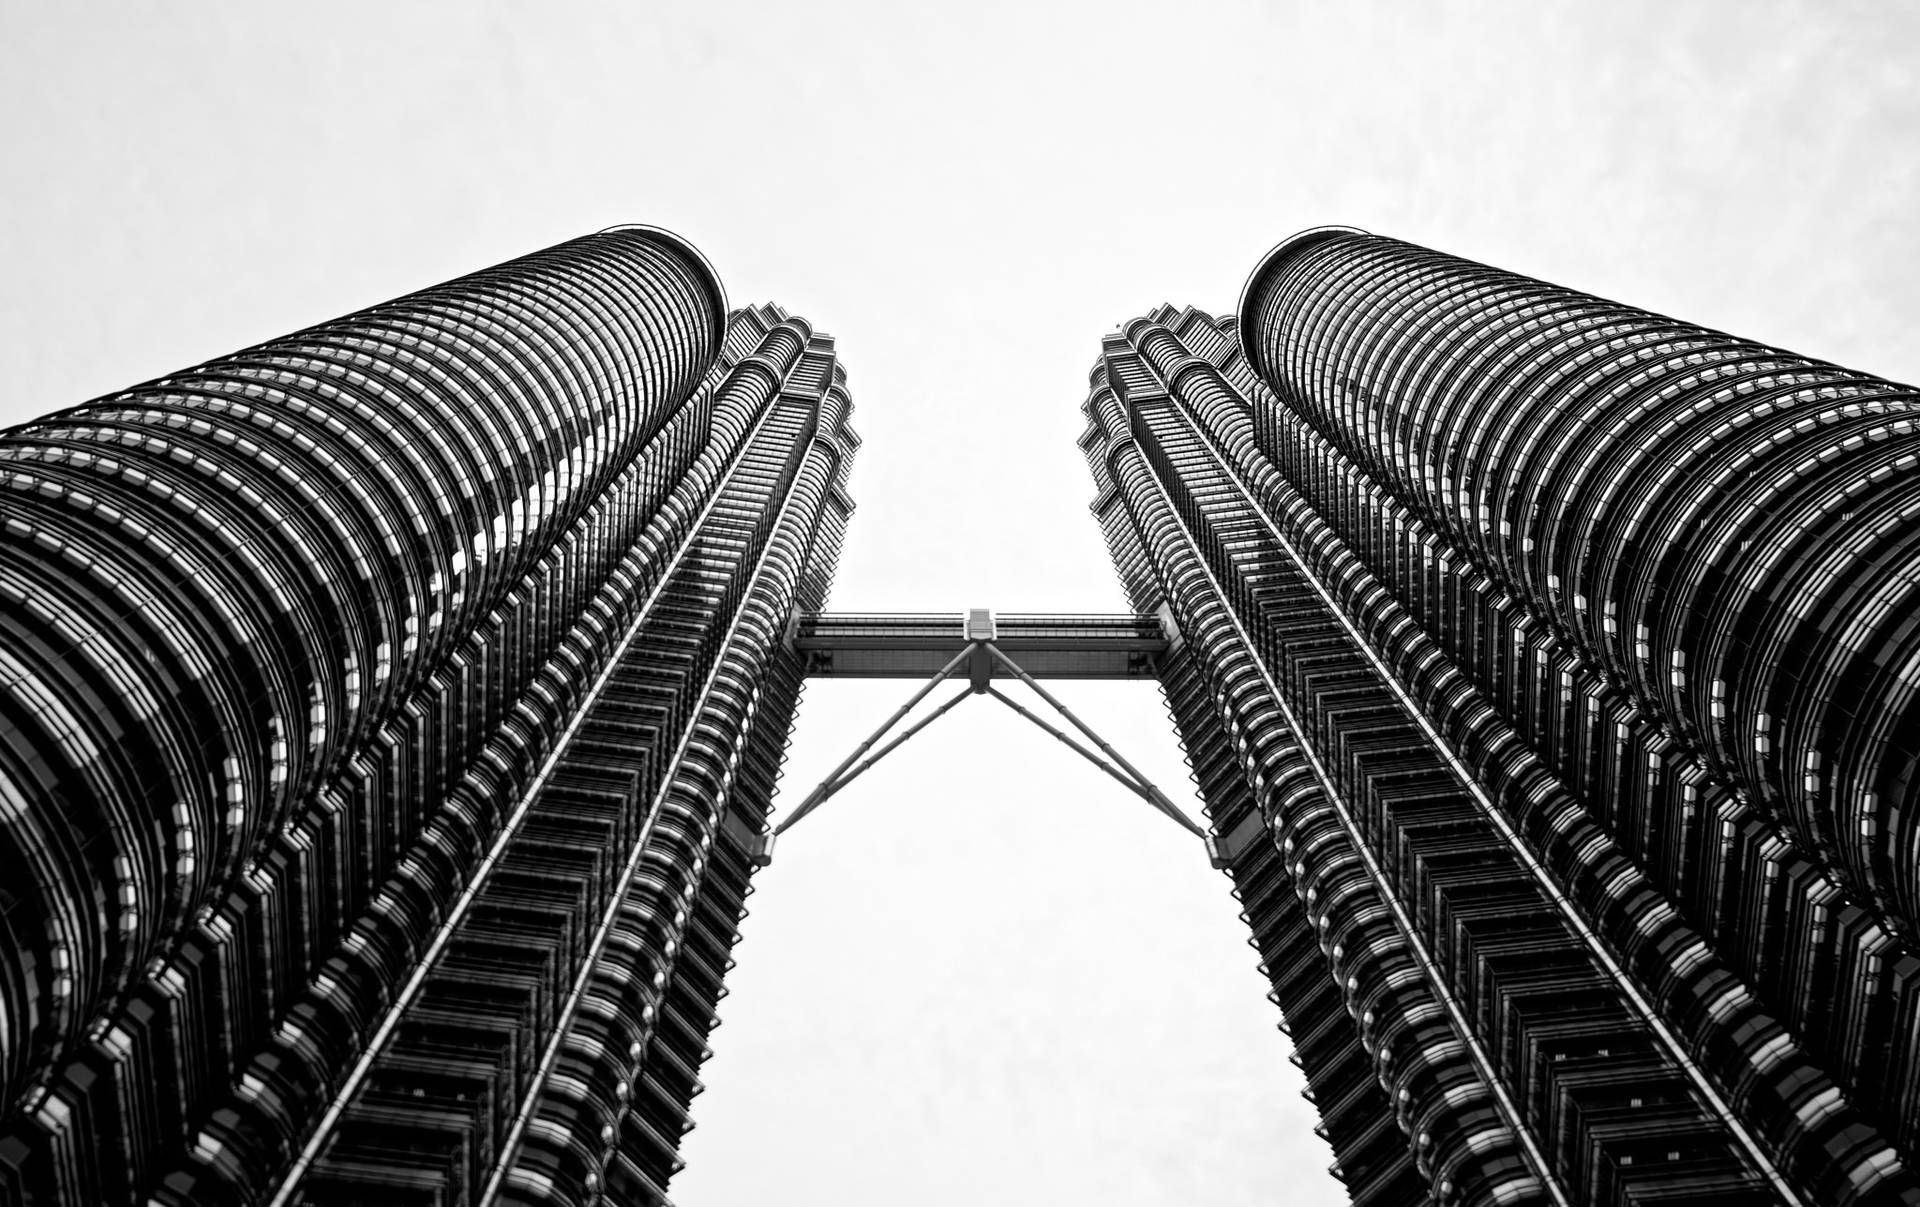 Underneath Petronas Towers Malaysia